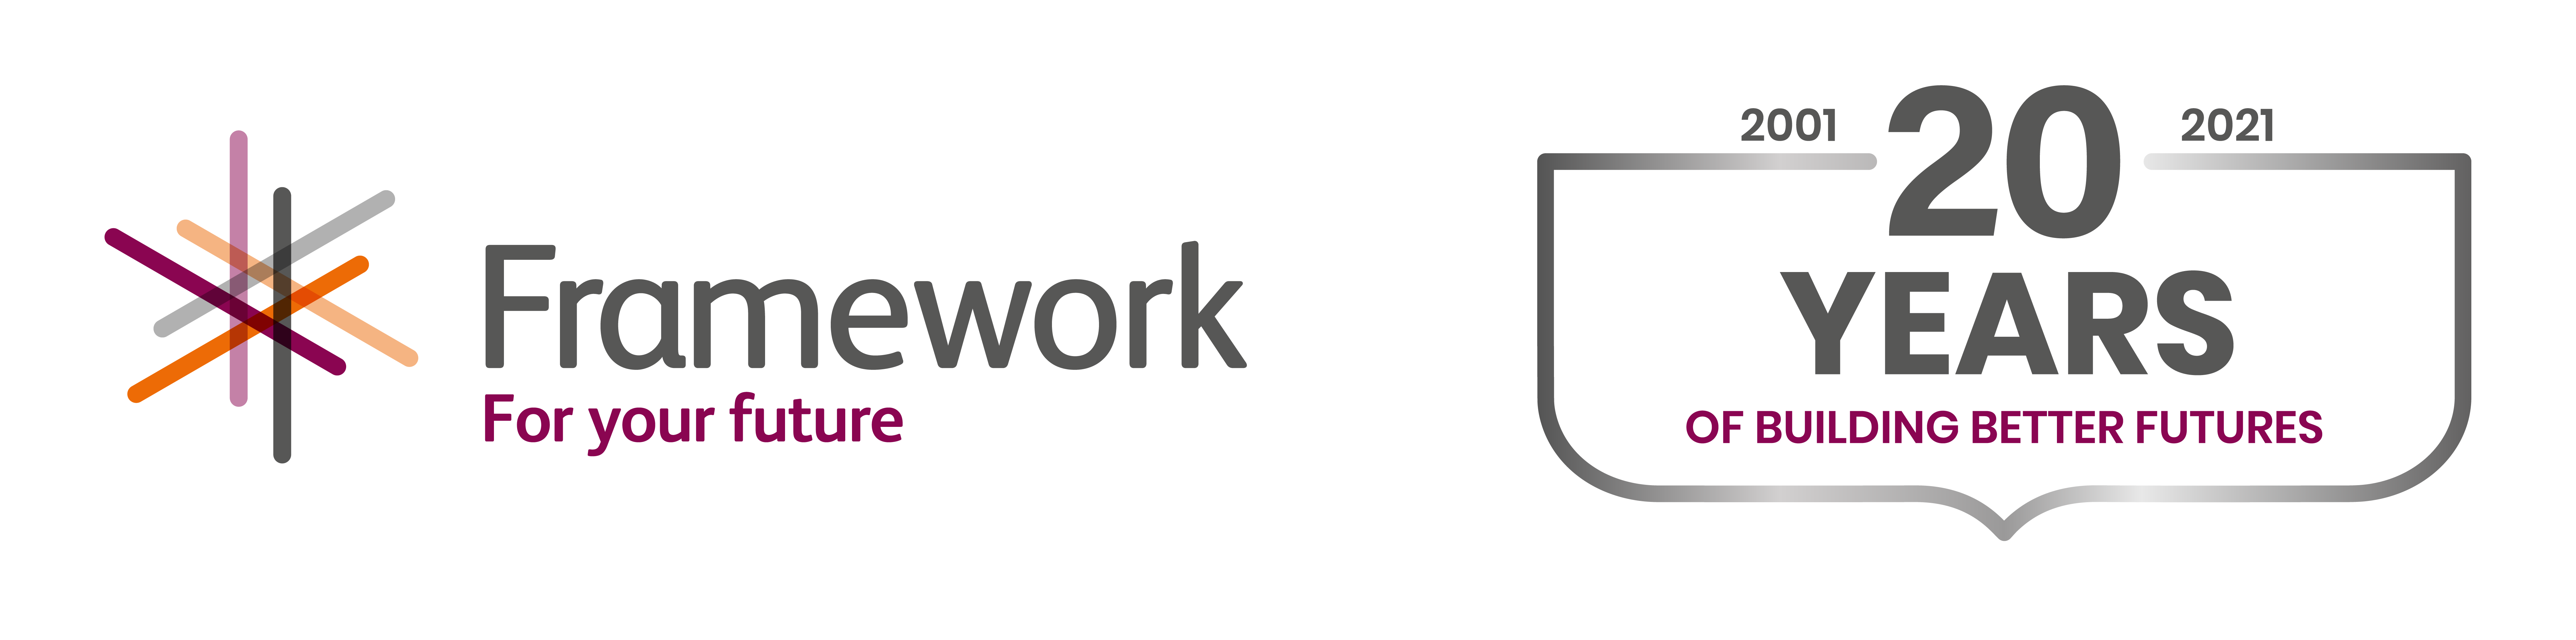 Framework logo